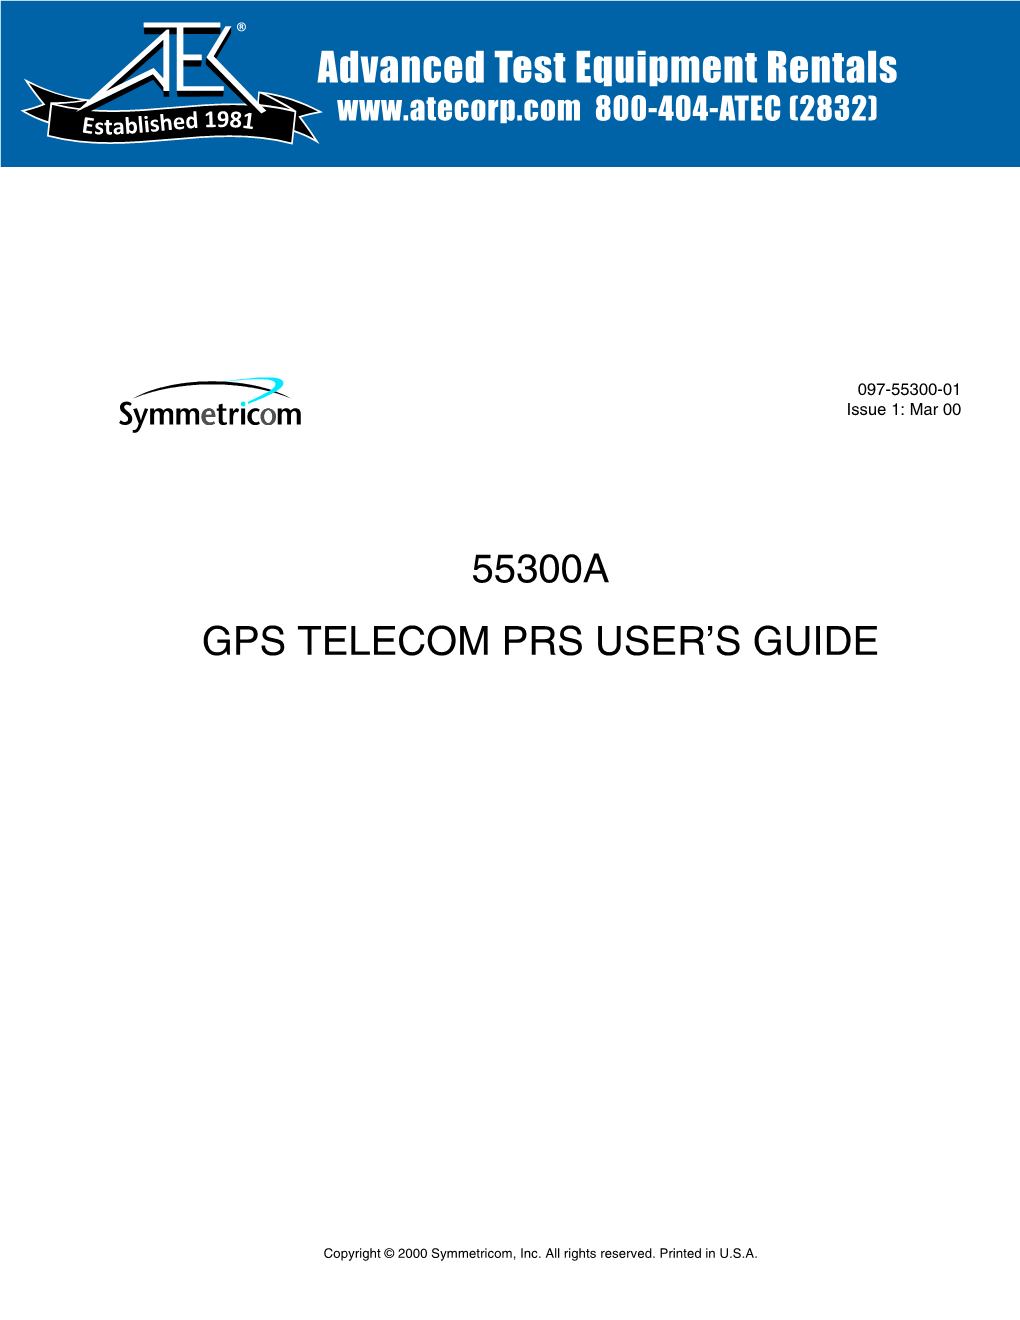 55300A GPS TELECOM PRS USER's GUIDE Advanced Test Equipment